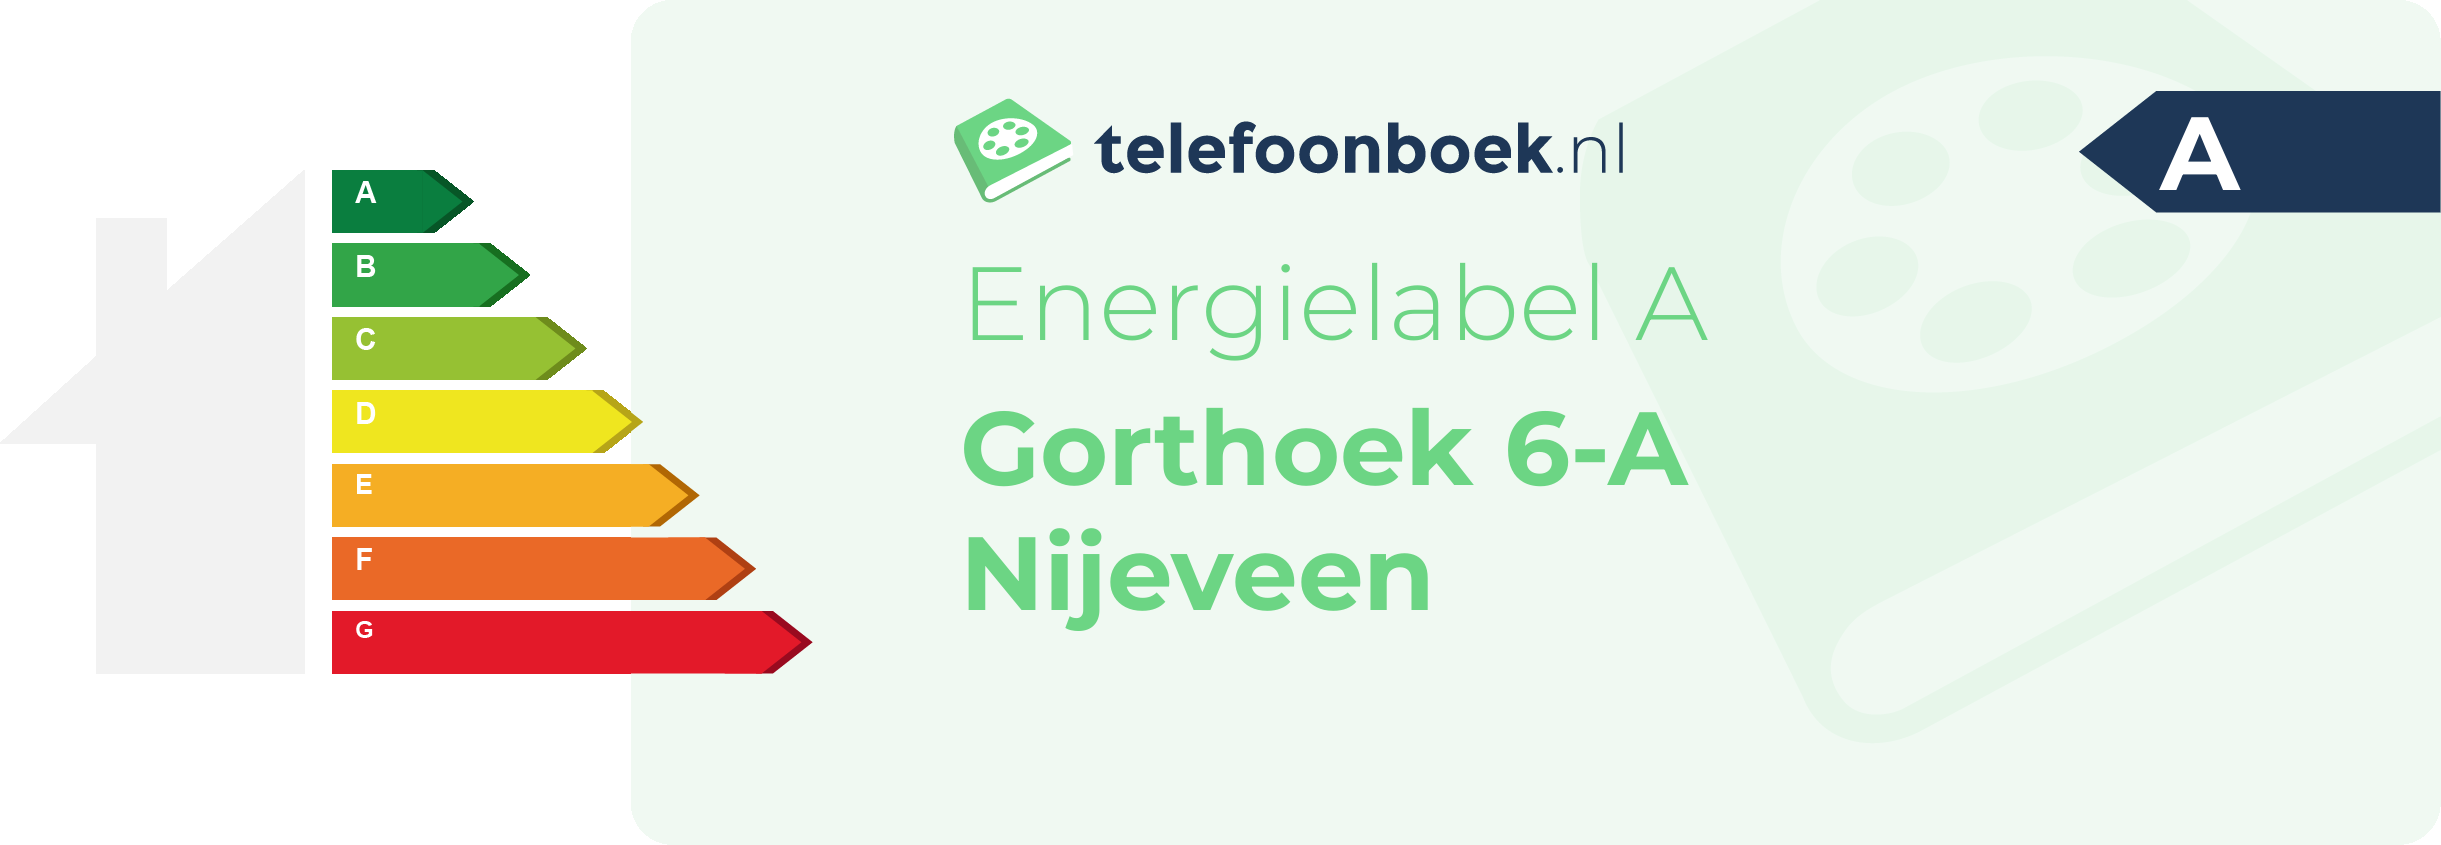 Energielabel Gorthoek 6-A Nijeveen